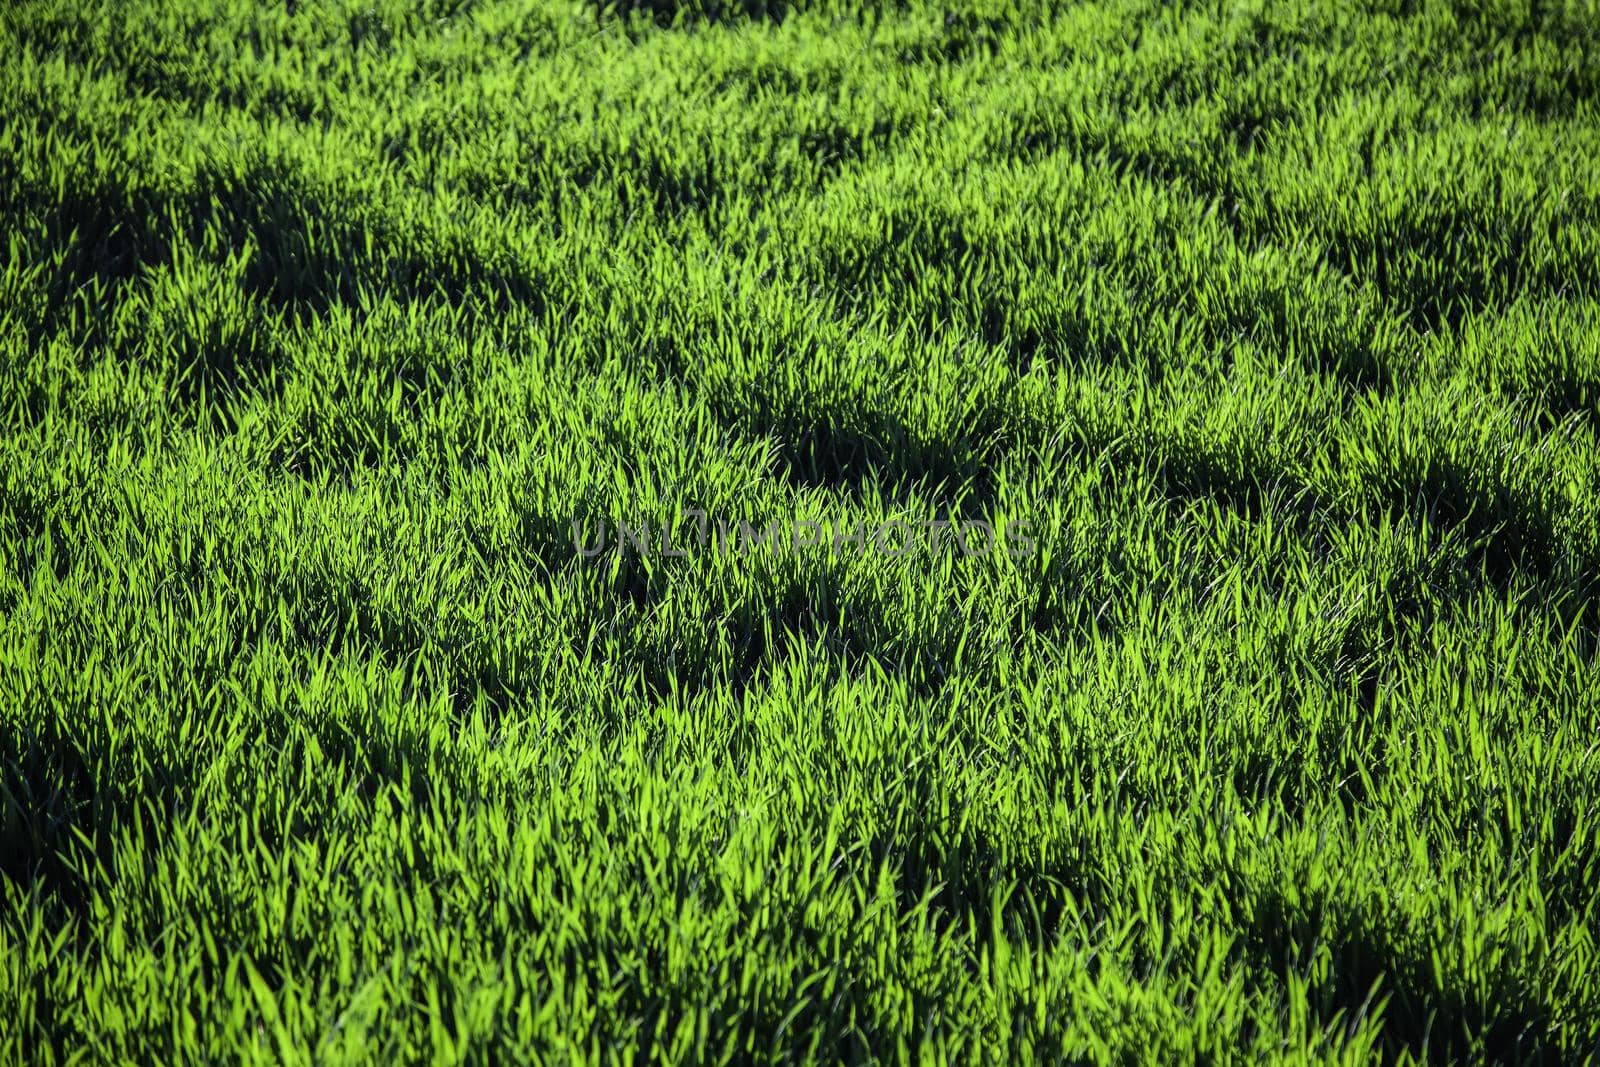 Field of fresh green grass by esebene